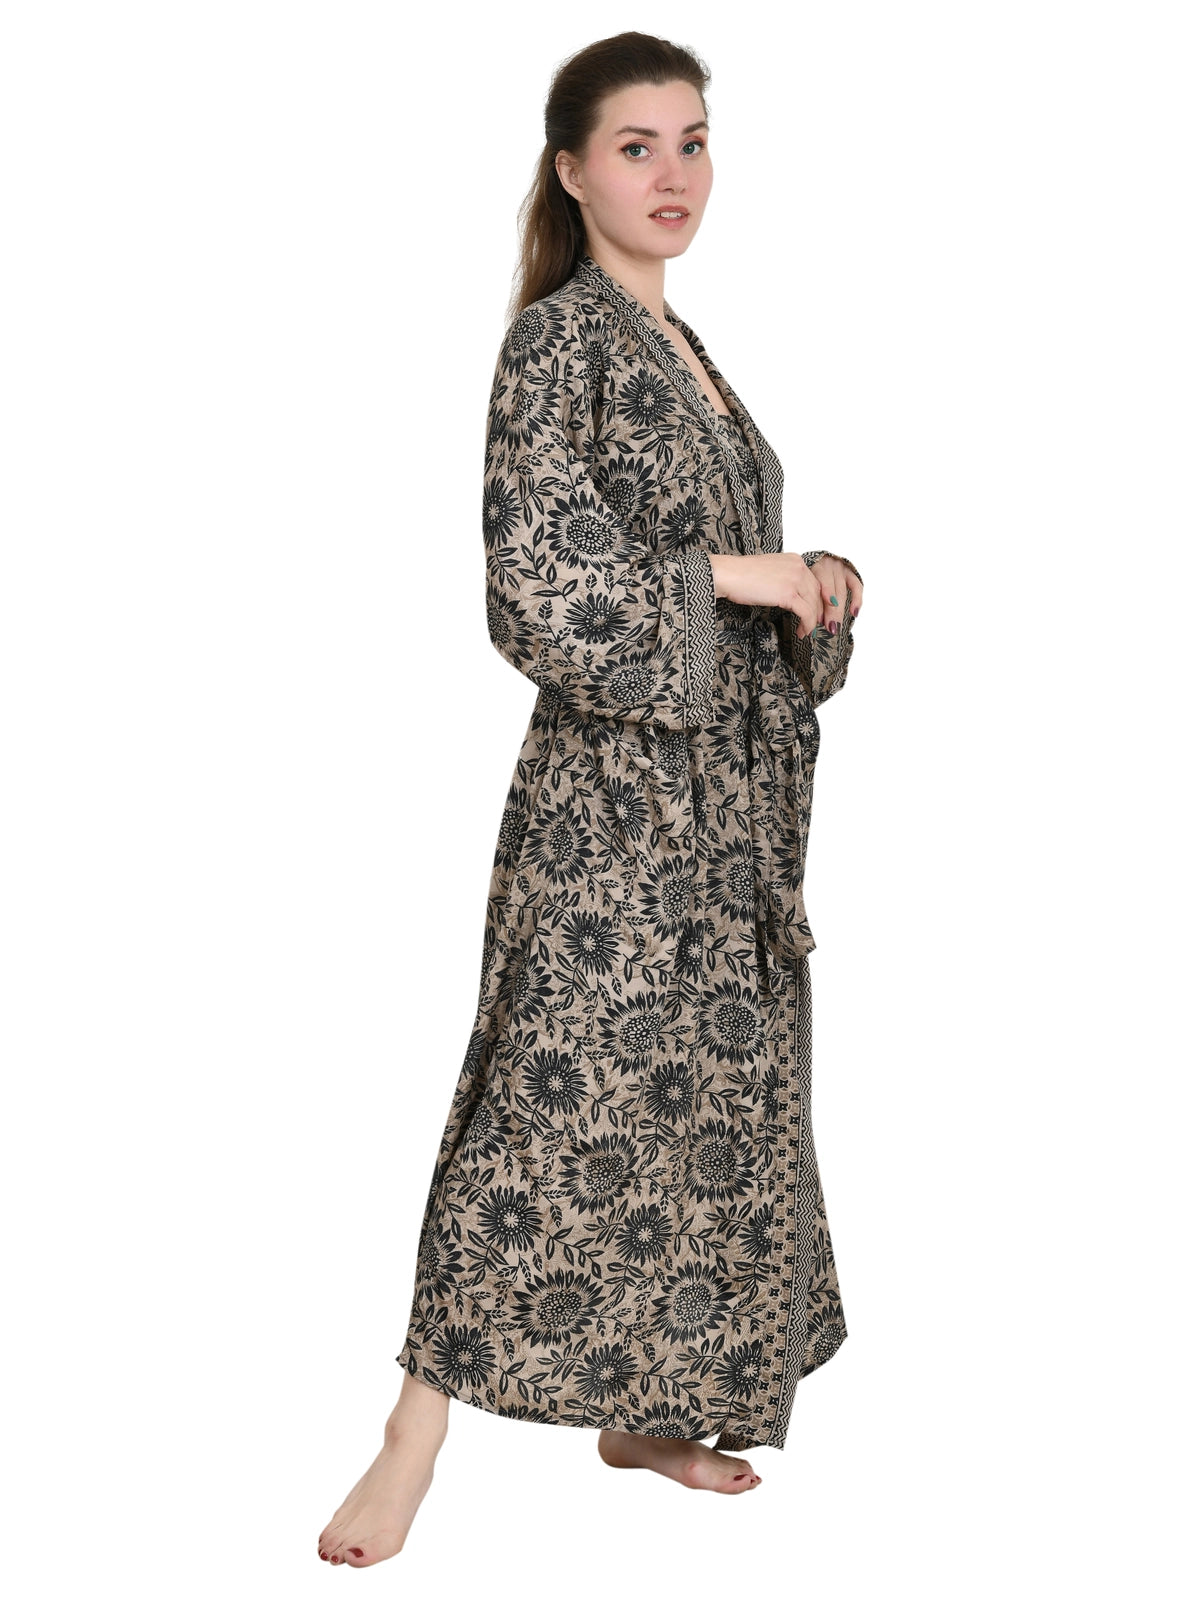 Silky Sari Pyjama Kimono Cami Top Boxer Set of 3 Night Suit Sleep Wear Luxury Lounge Boho Dress Royal Beach Cover Up Floral Cardigan Gift For Her